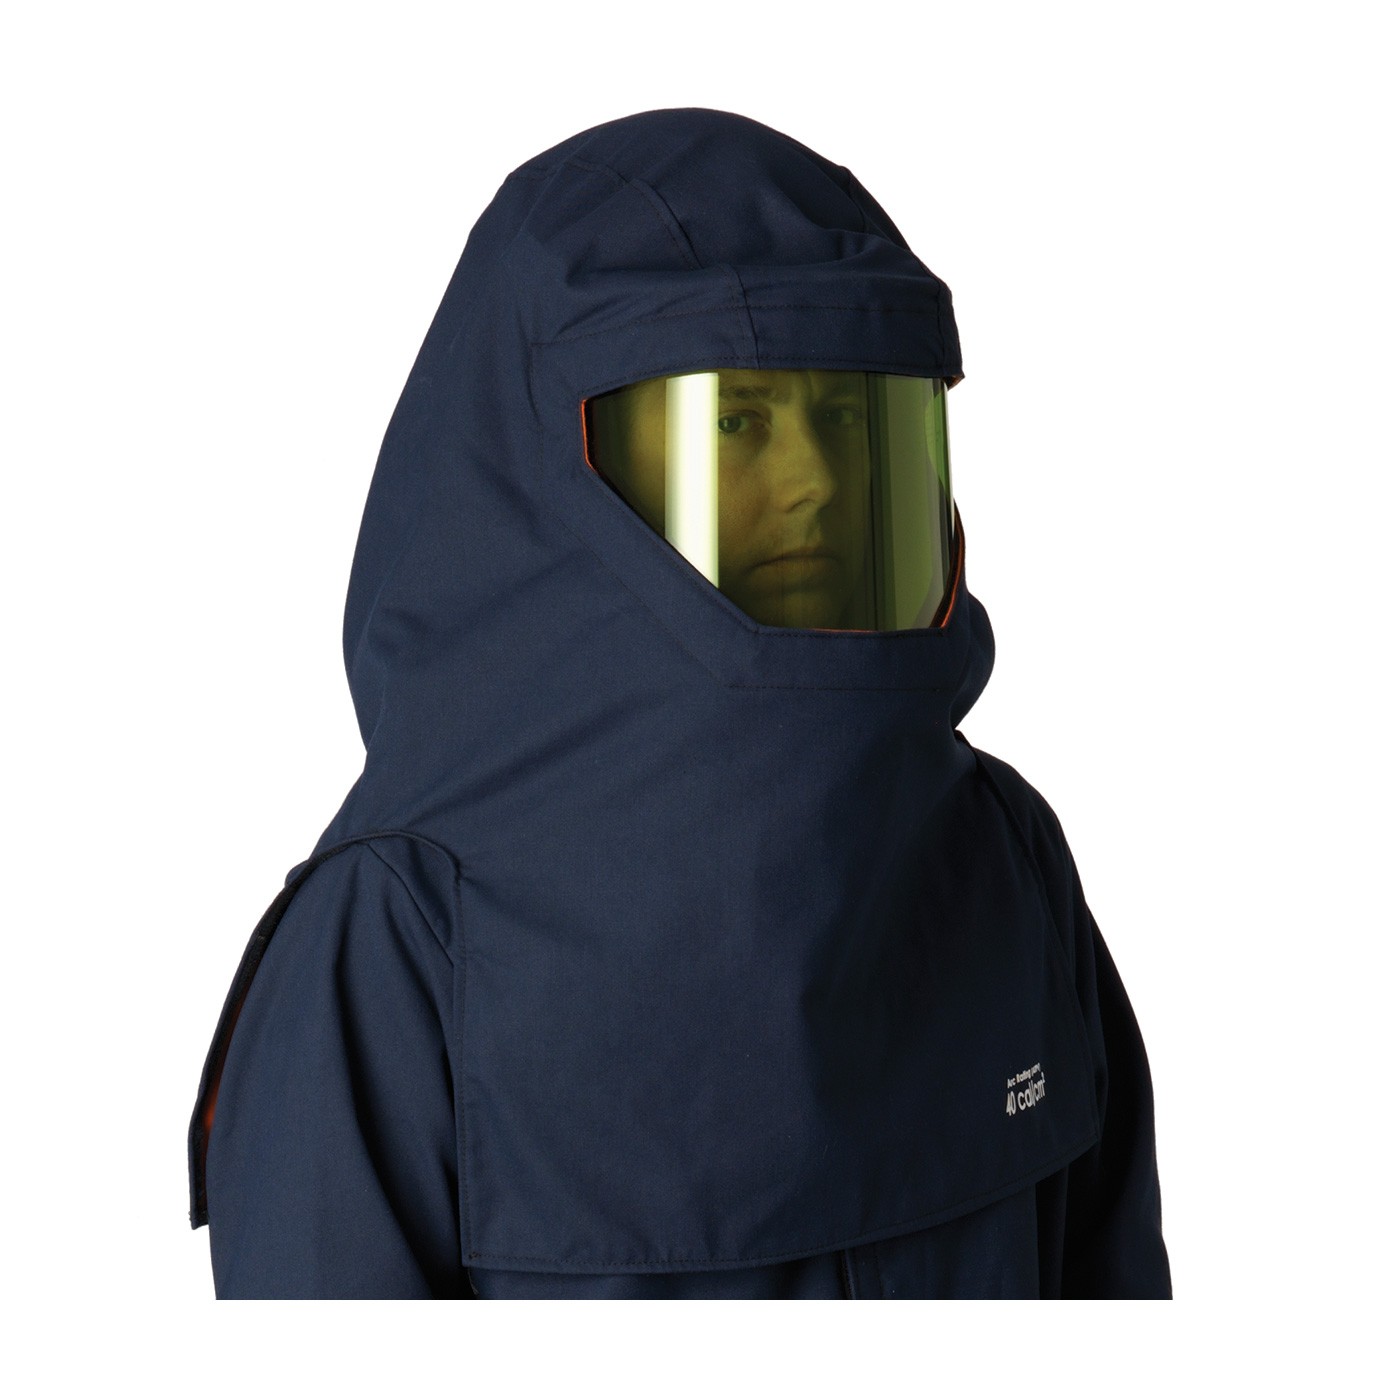 40 Cal FR Ultralight Hood, Multi Layer Fabric, Navy